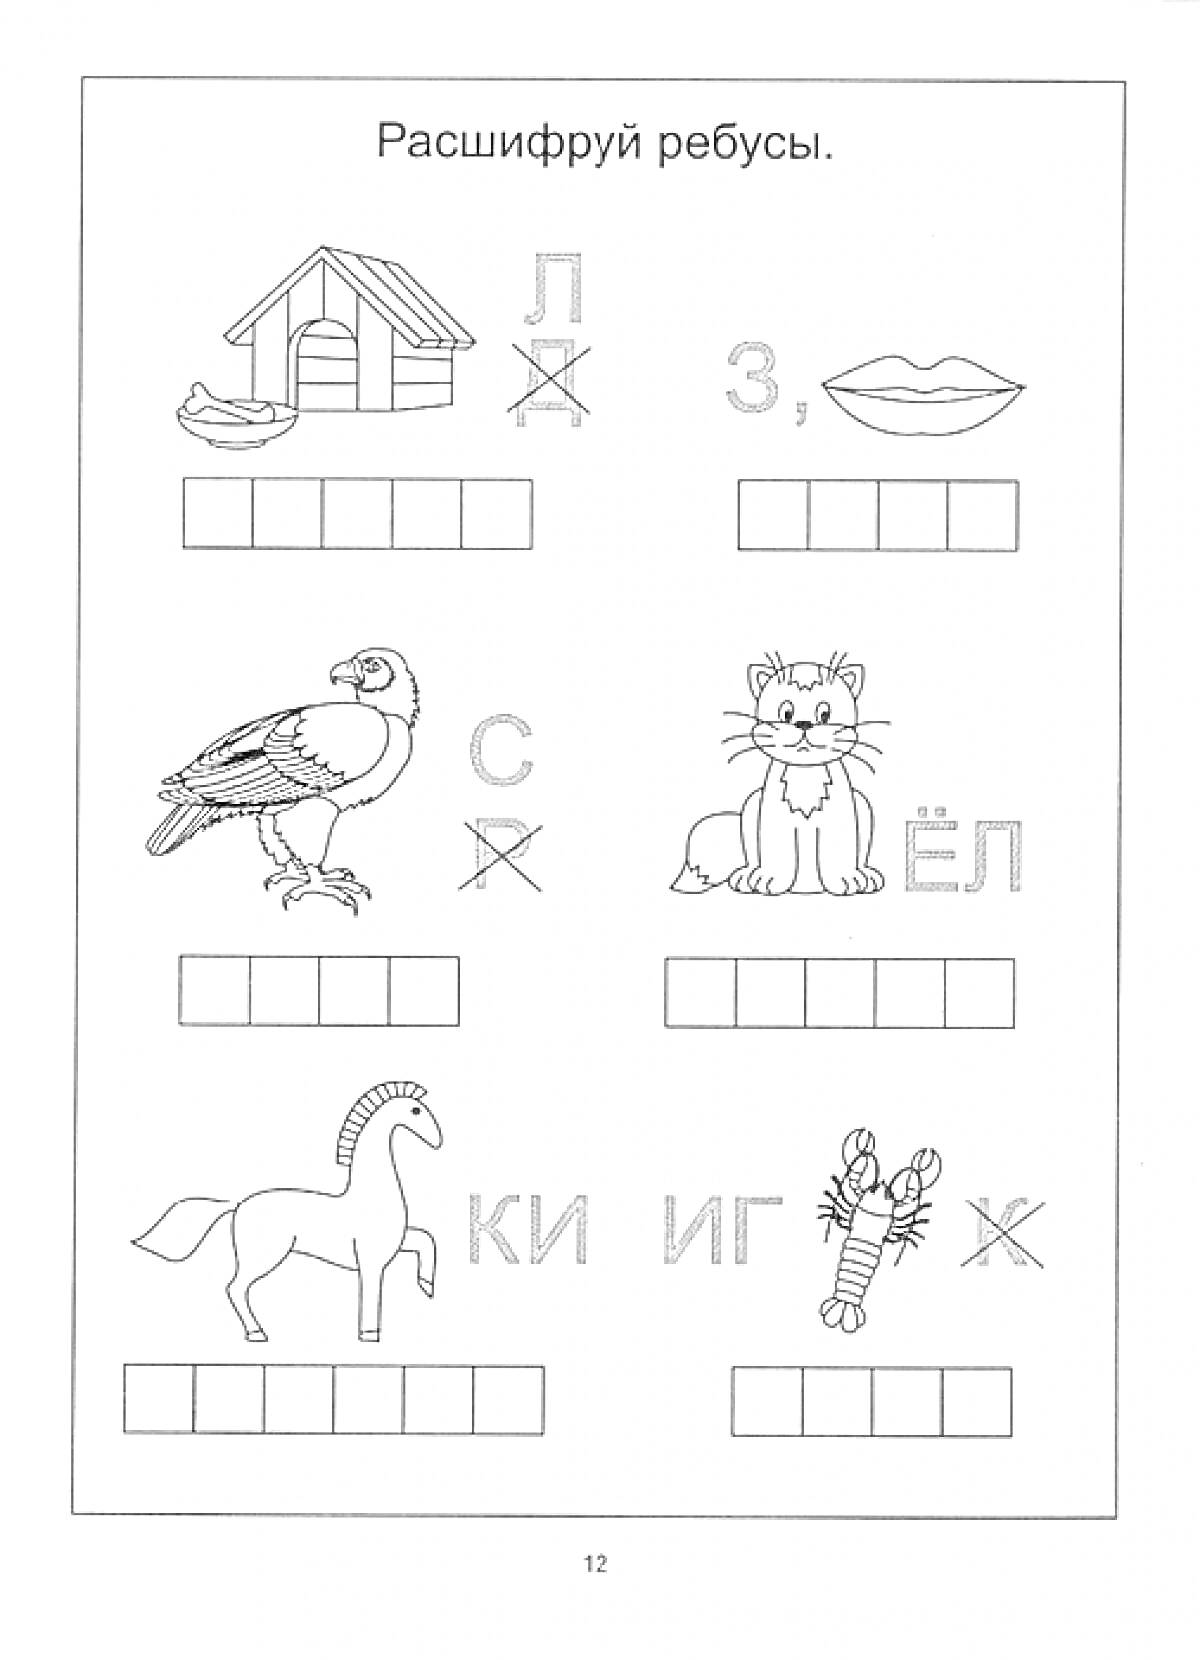 Ребусы с изображениями: домик, лодка и крестик; губы и буква З; птица и буквы С и крестик; кот и ёлка; лошадь и буква К; ракета, ки и г и буква Ж